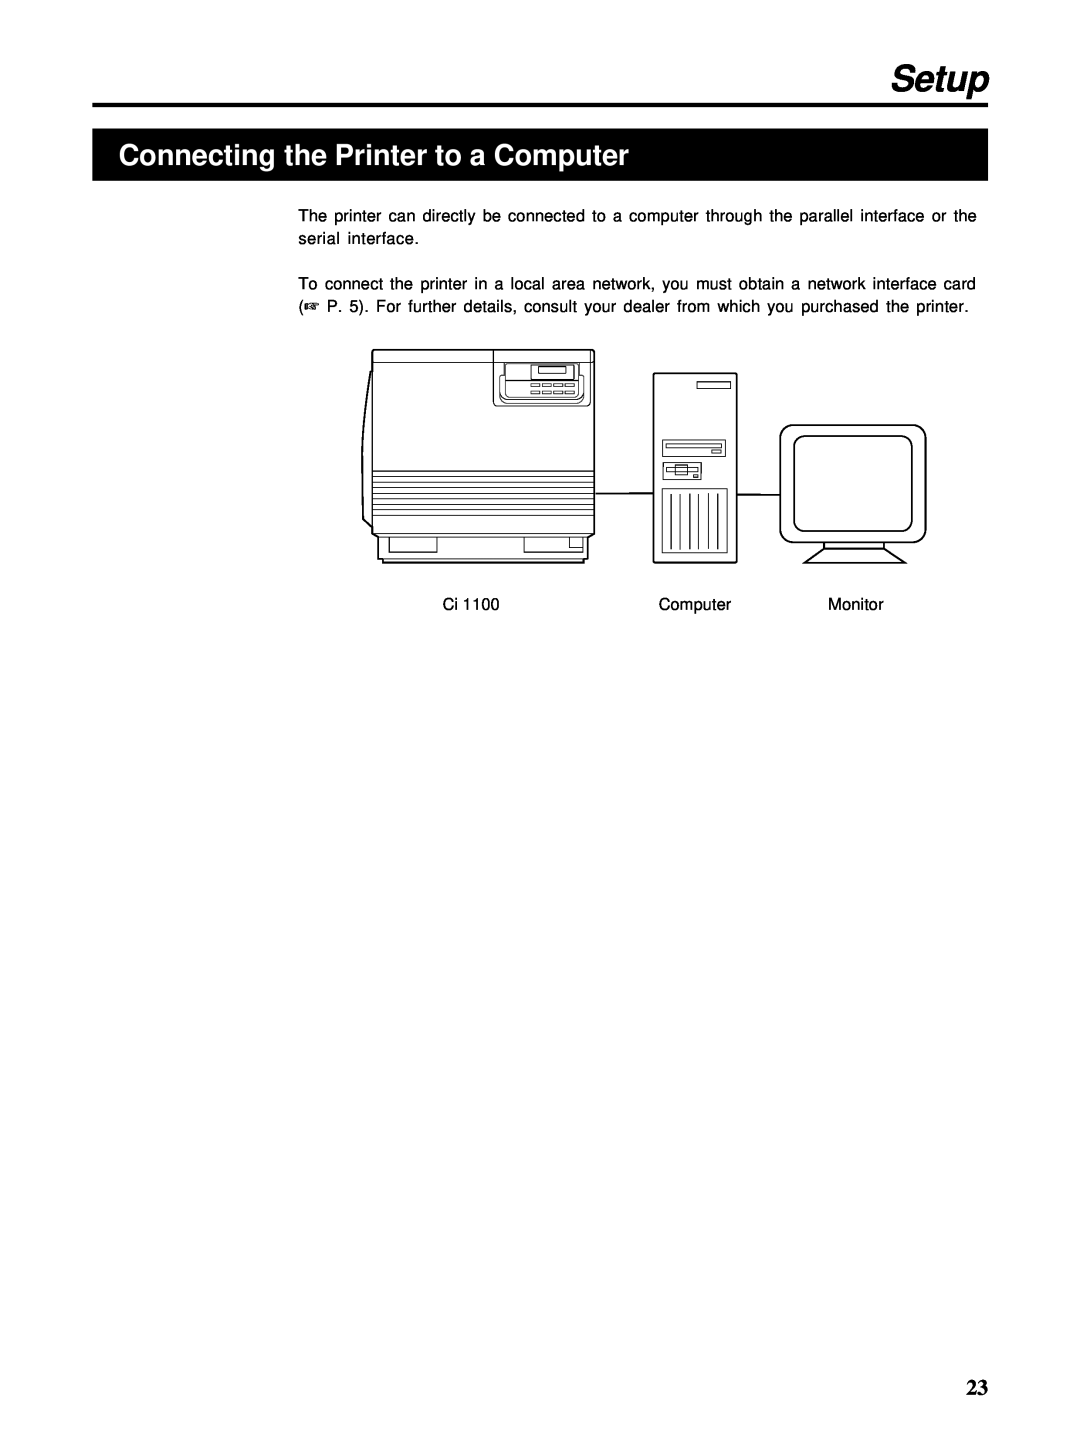 HP Ci 1100 manual Connecting the Printer to a Computer, Setup, Monitor 